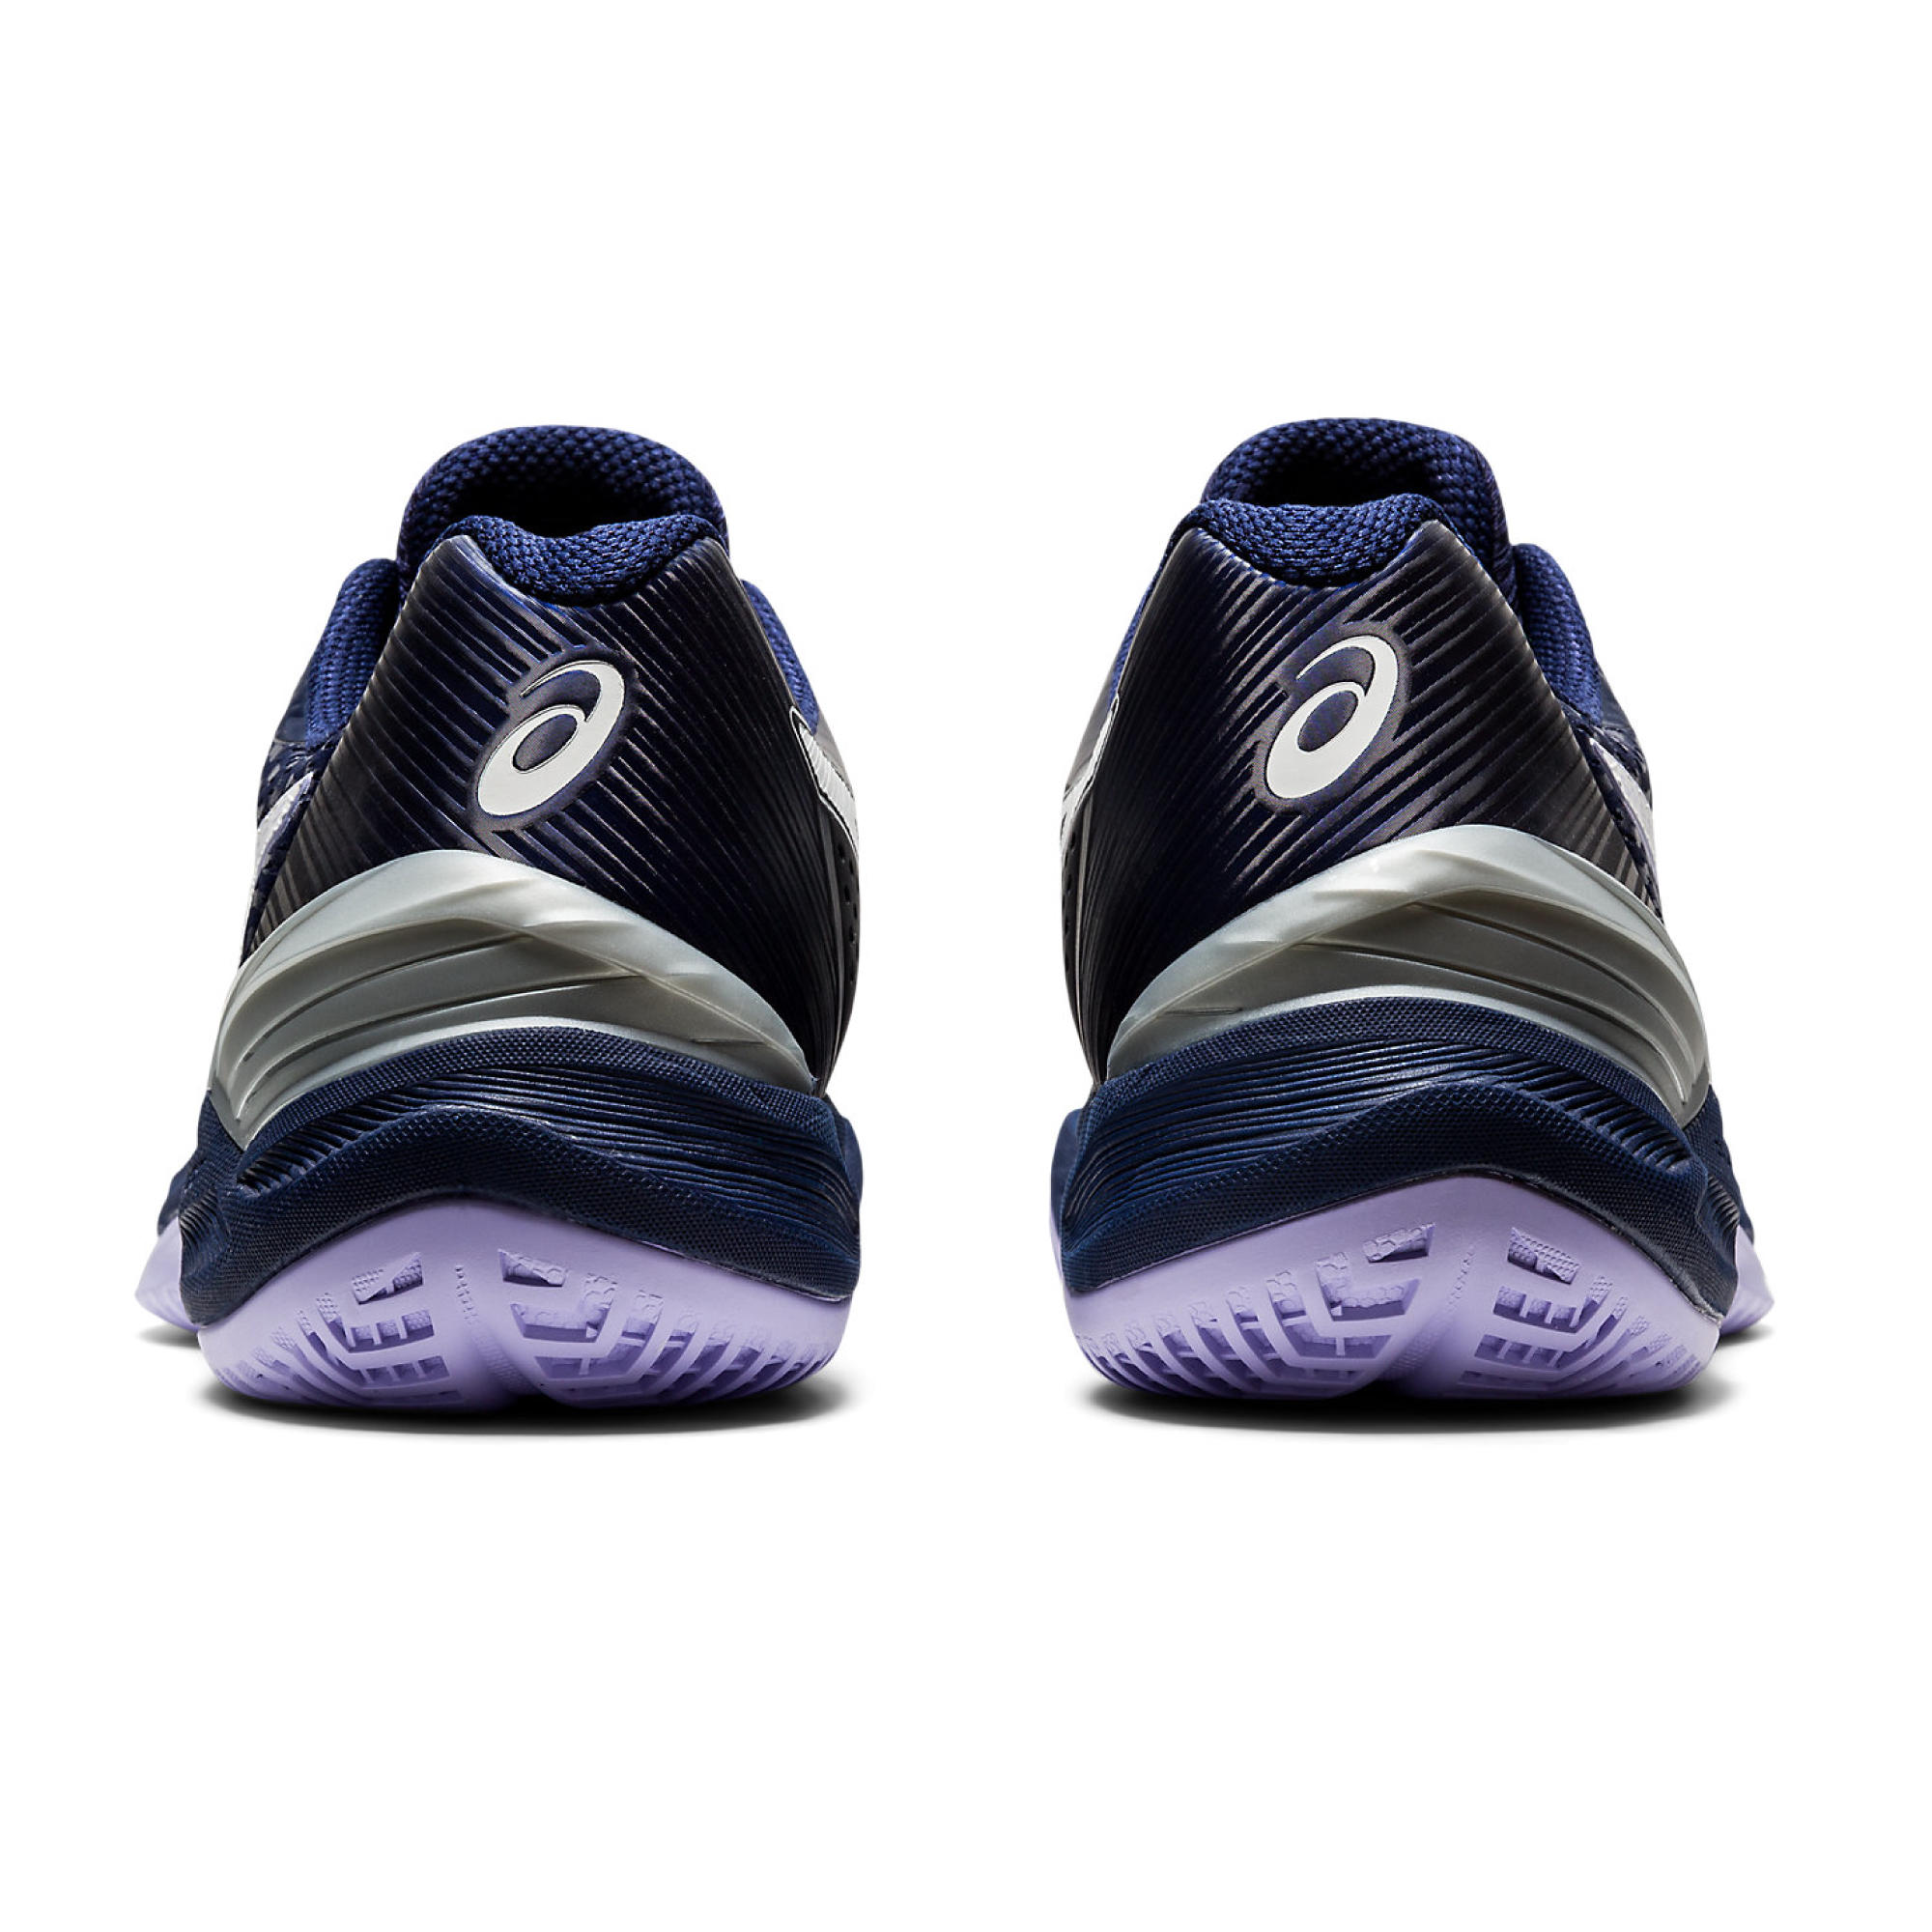 Women's Volleyball Shoes Sky Elite - Purple/Blue 7/8